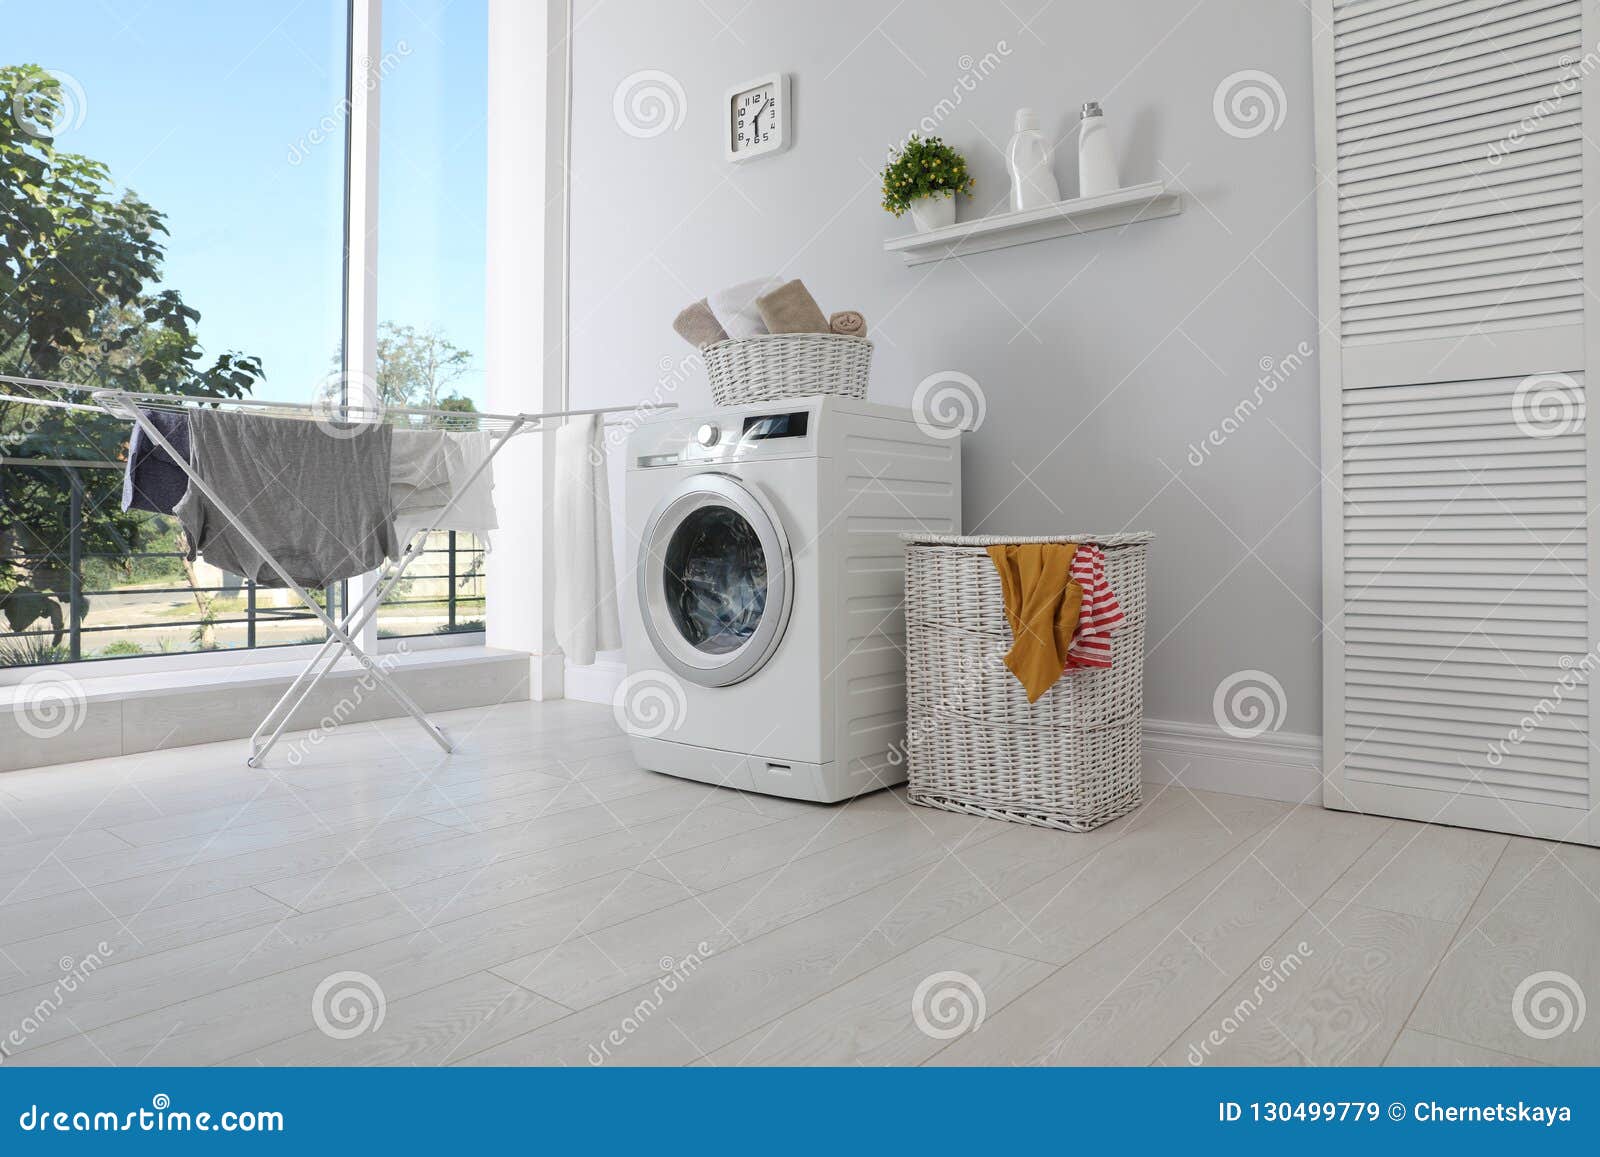 Laundry Room Interior with Washing Machine Stock Image - Image of ...